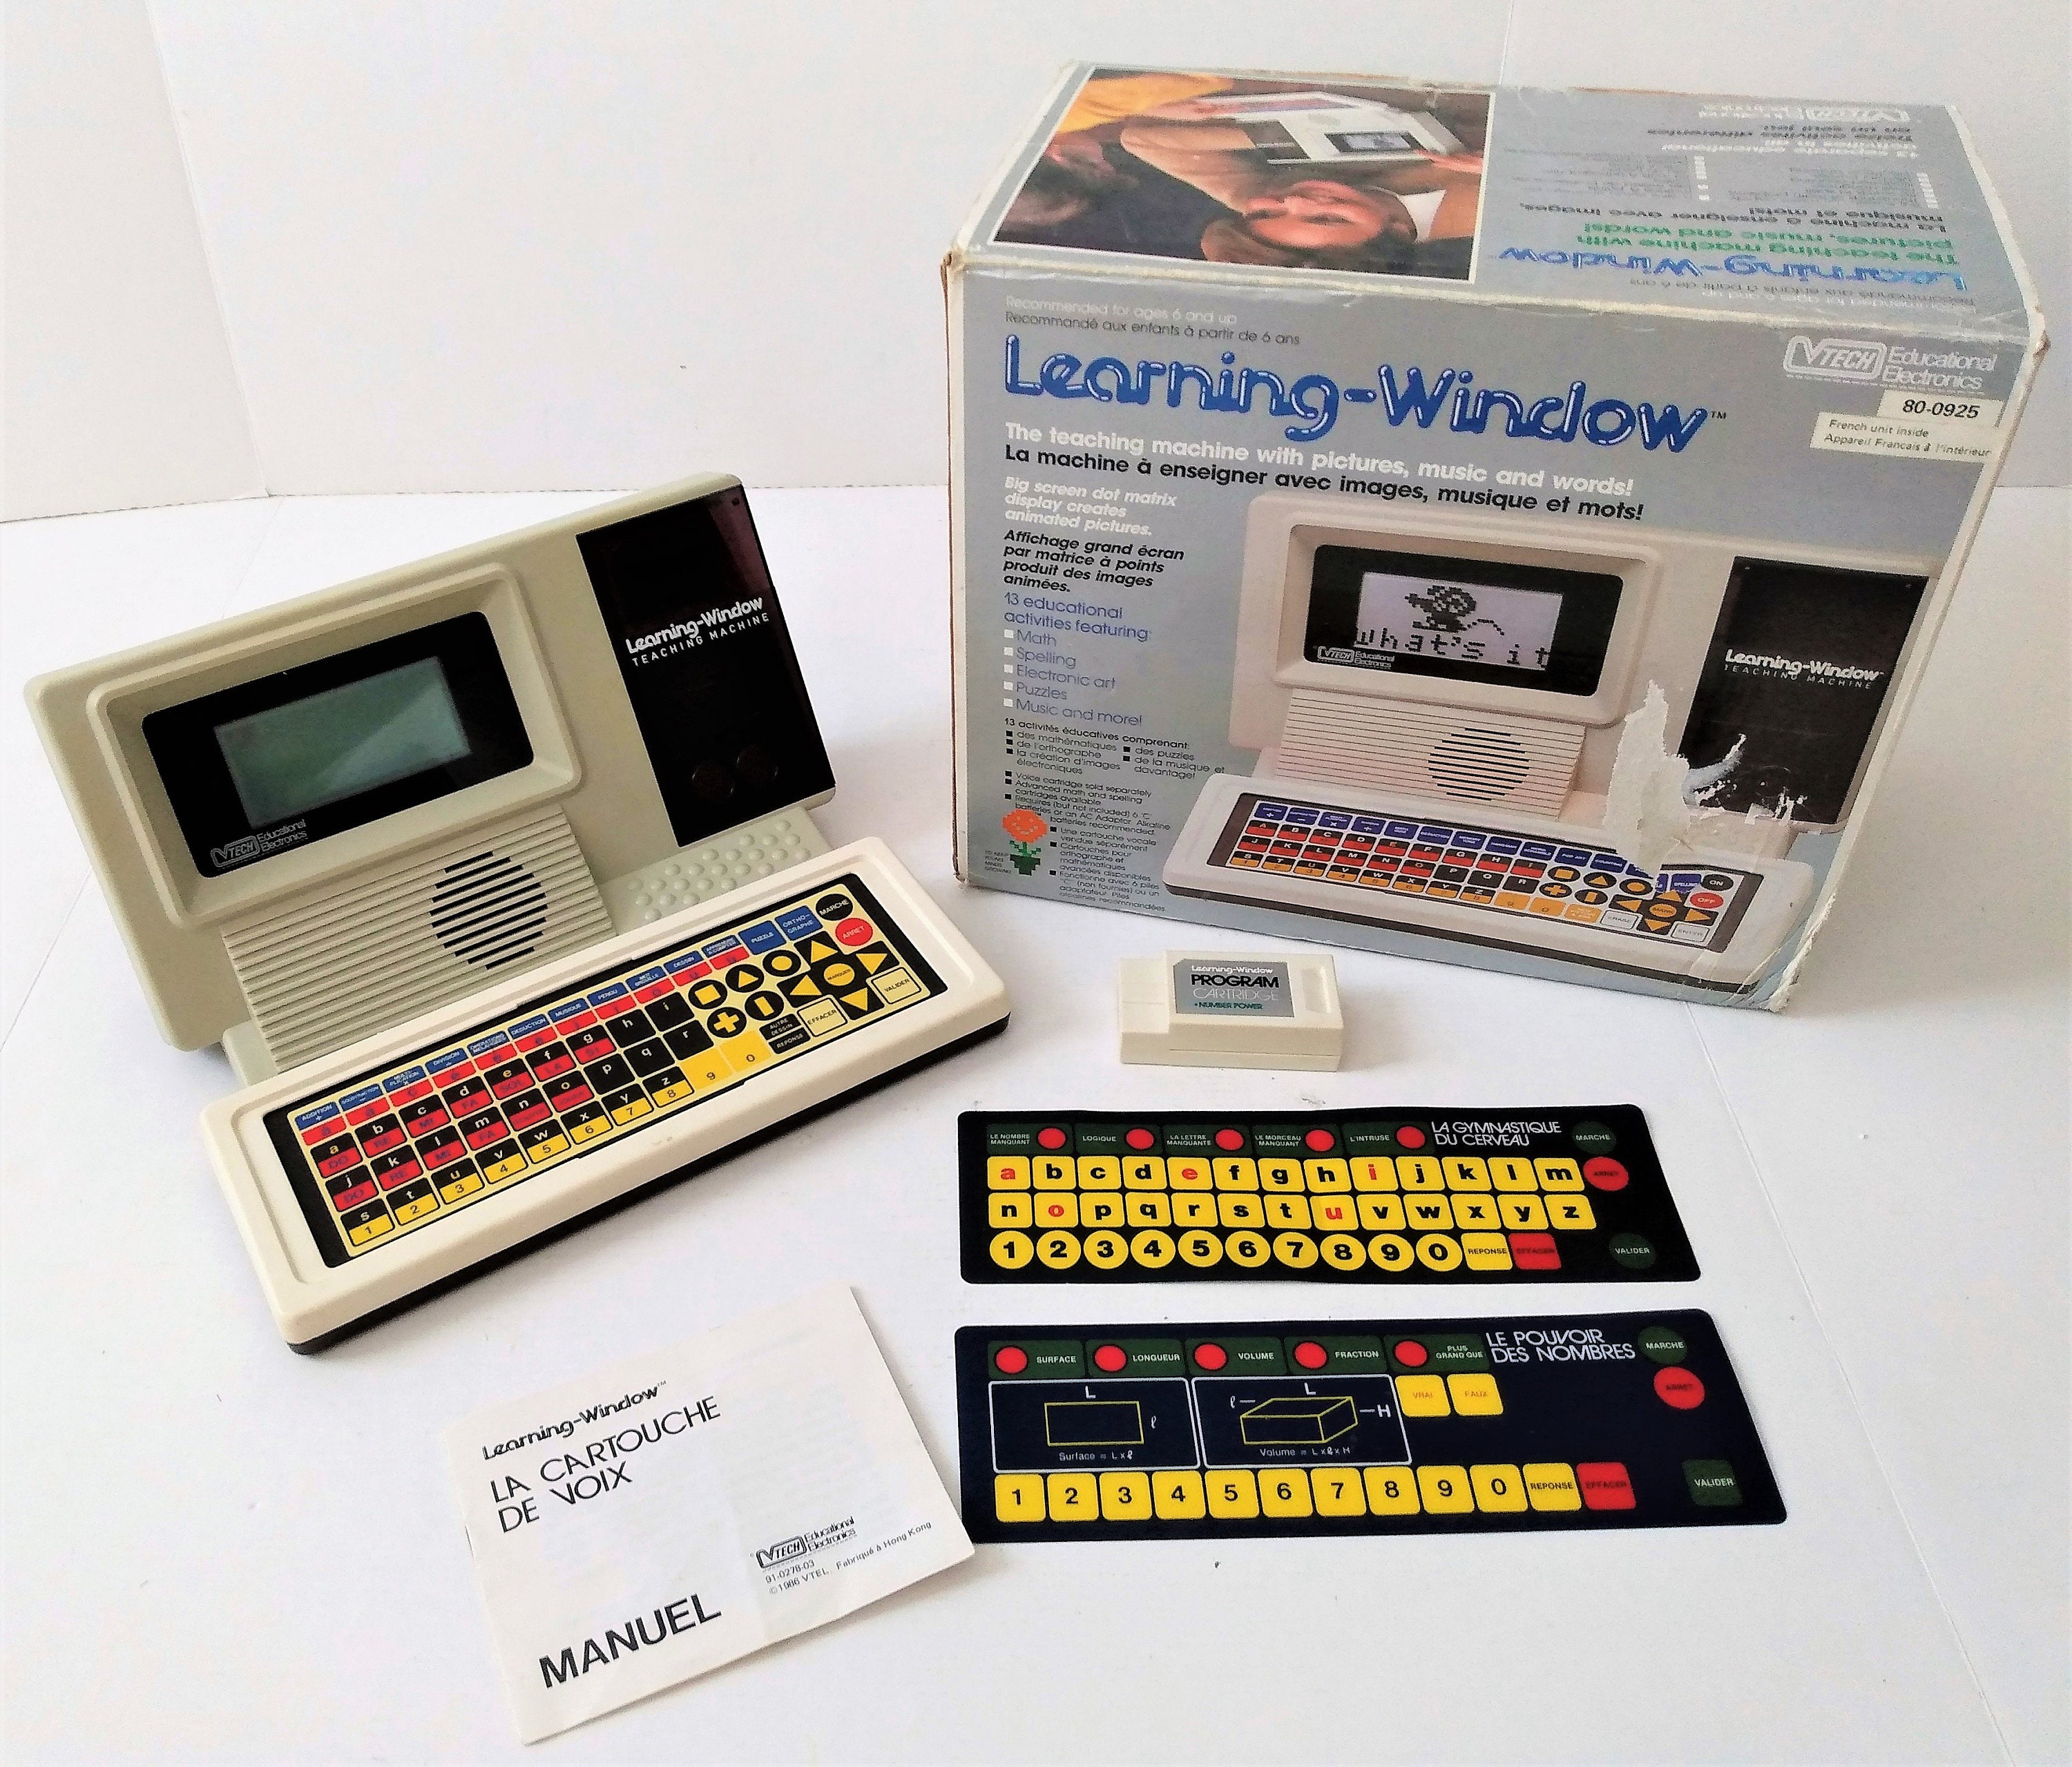 VTech+Talking+Whizz+Kid+Notebook+2000+Vintage+Educational+Kids+Computer for  sale online